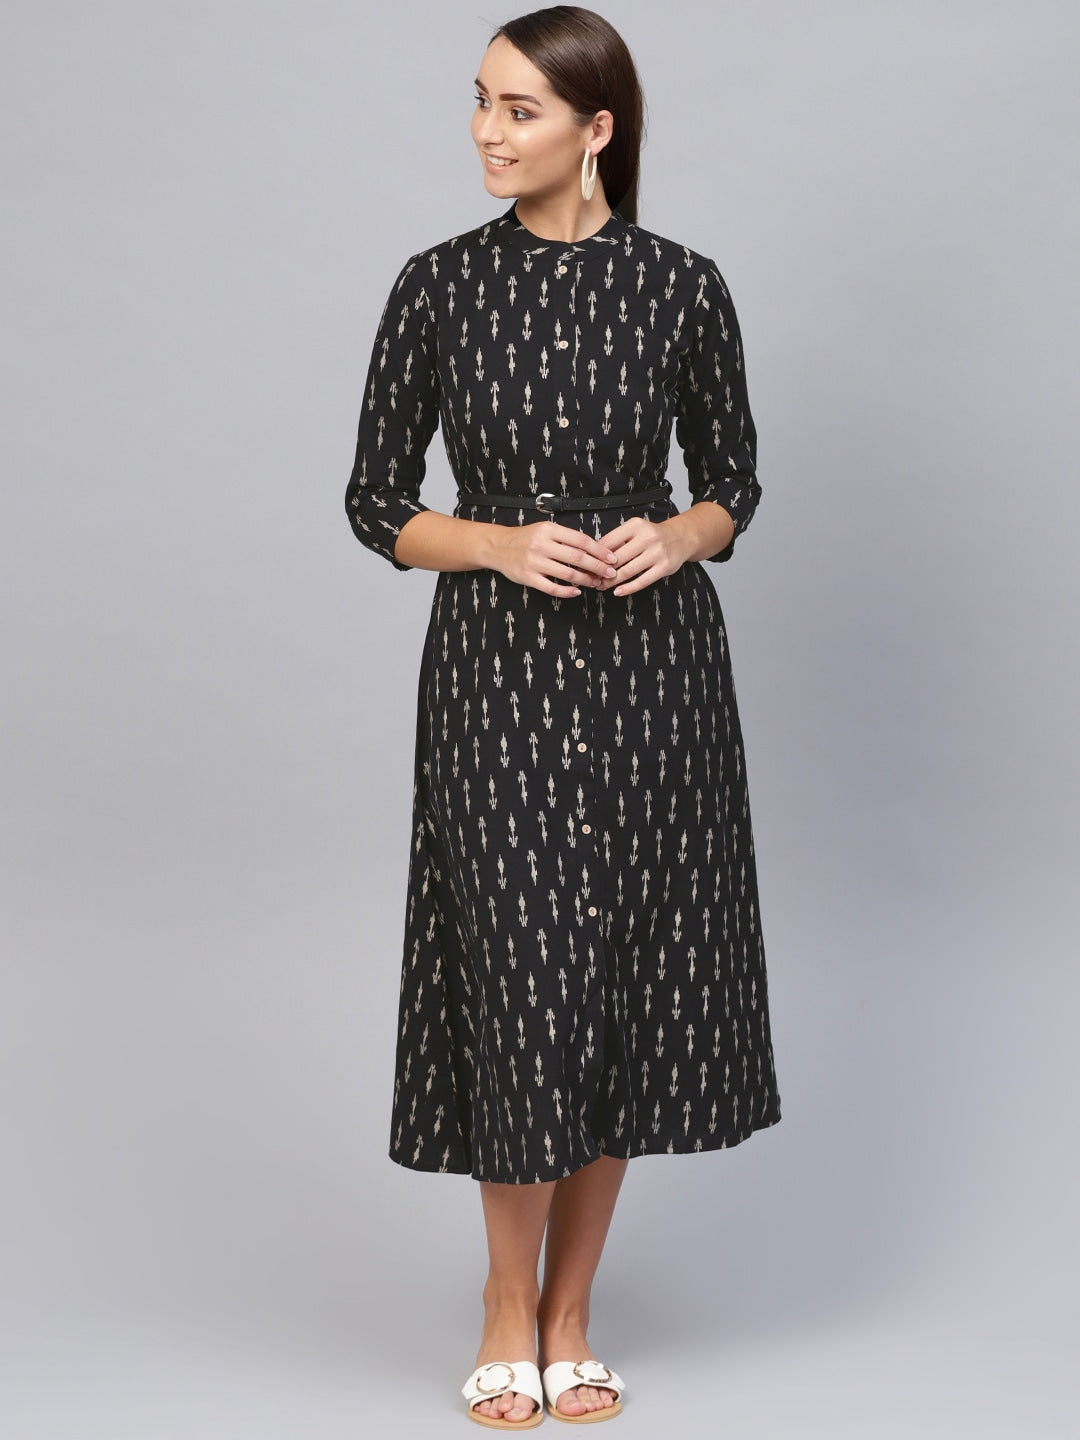 Black & Beige A-Line Dress-Yufta Store-7151KUBKS